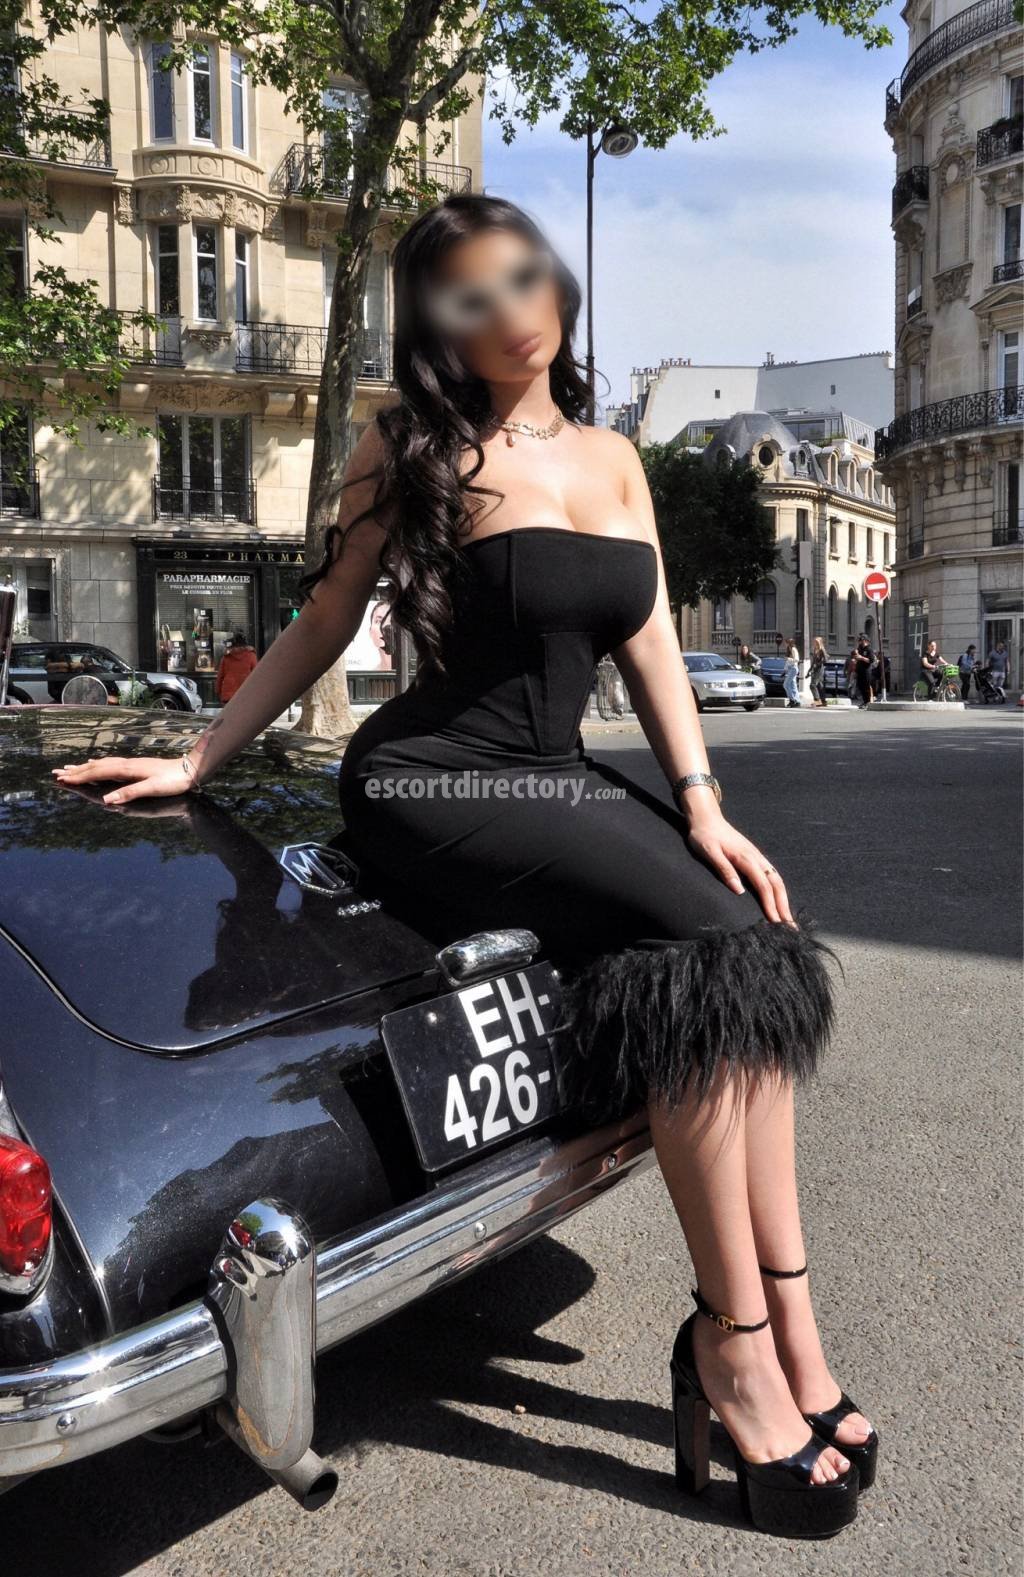 Ayah-Bella Vip Escort escort in Paris offers Kissing services